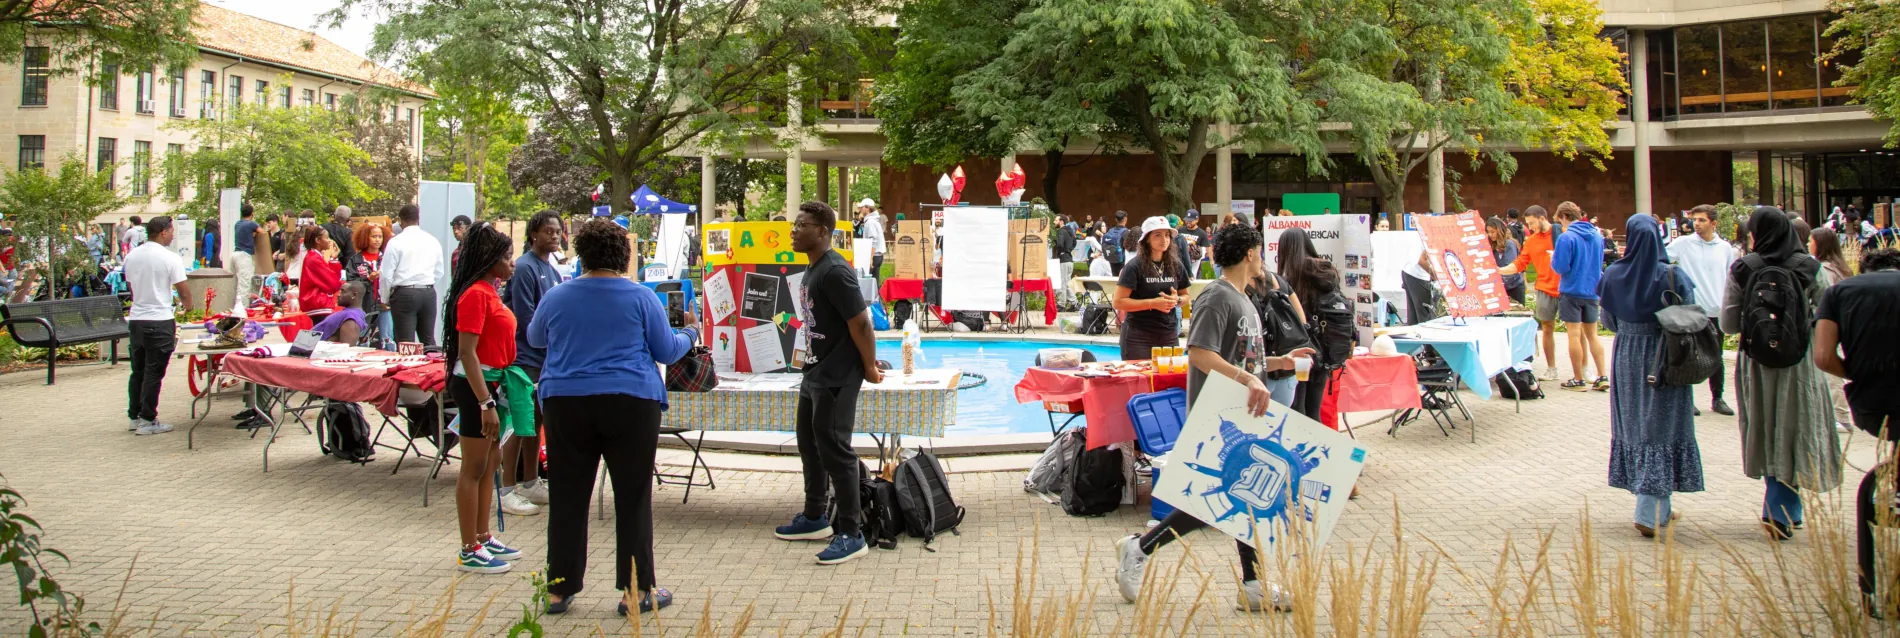 Students organization fair around the Fisher Fountain